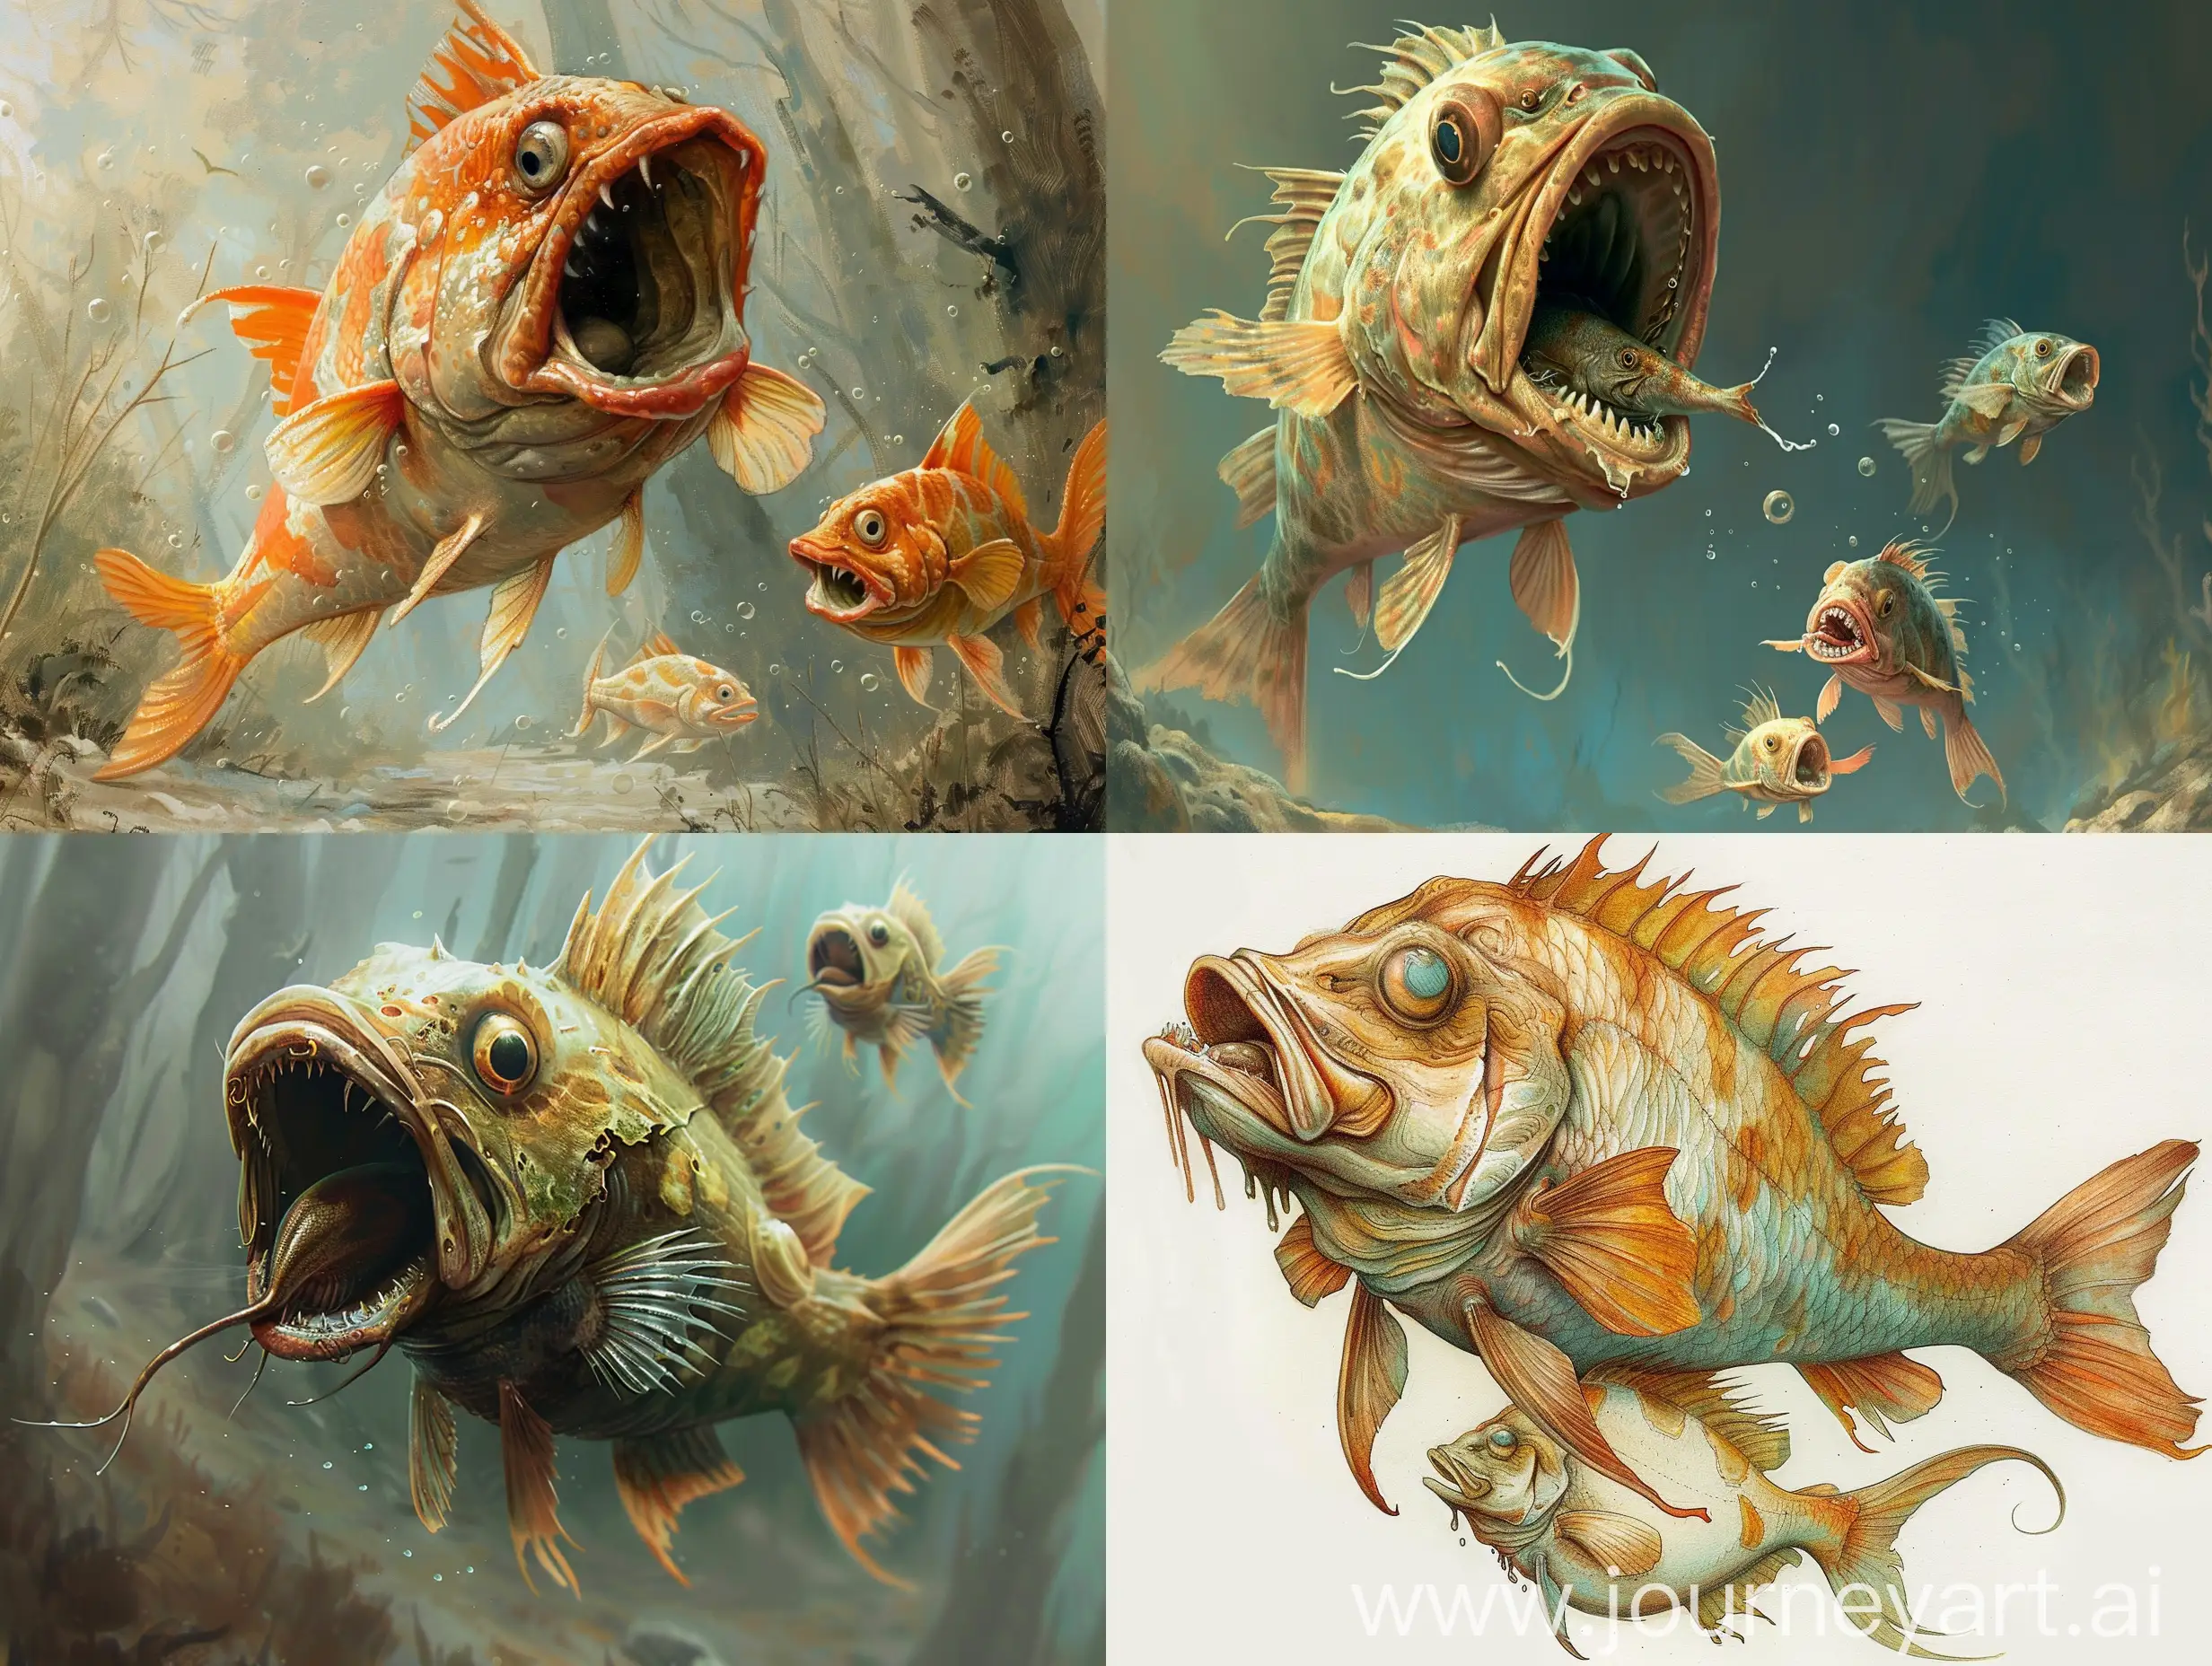  Tiny fish swallowing bigger fish whole, weird, grotesque, detailed, fantasy. 